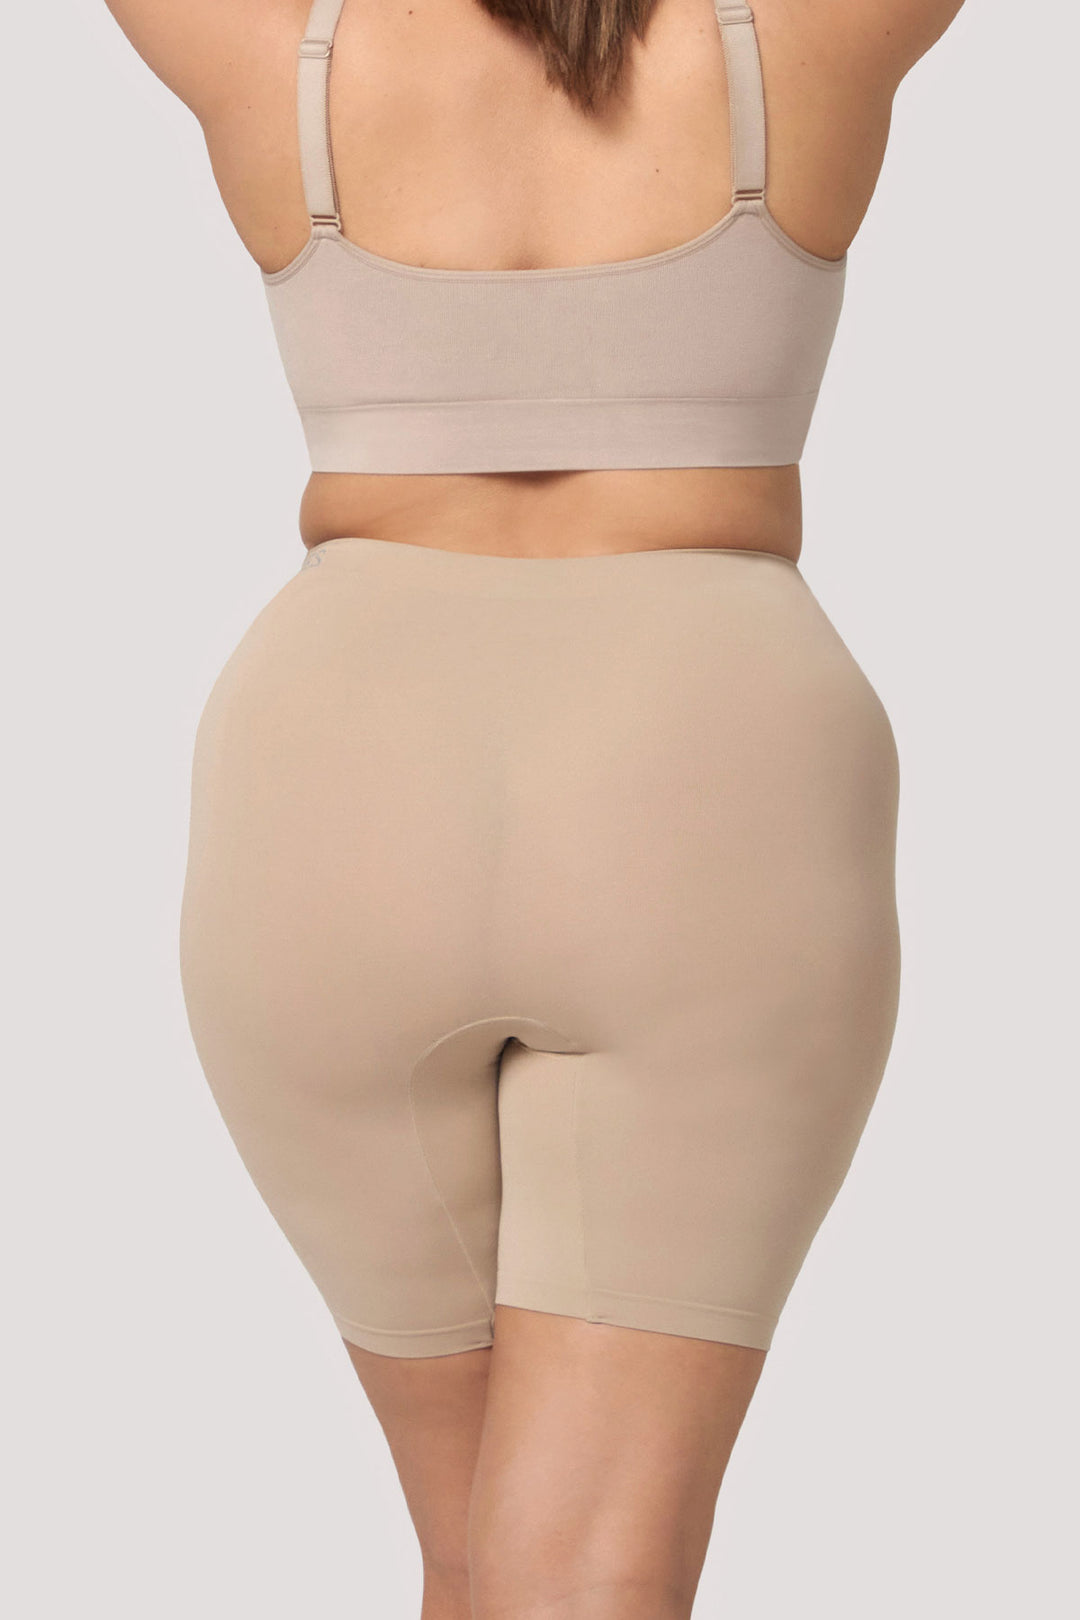 Women's underwear Anti Chafing Shorts | Bella Bodies UK | Sand | Back